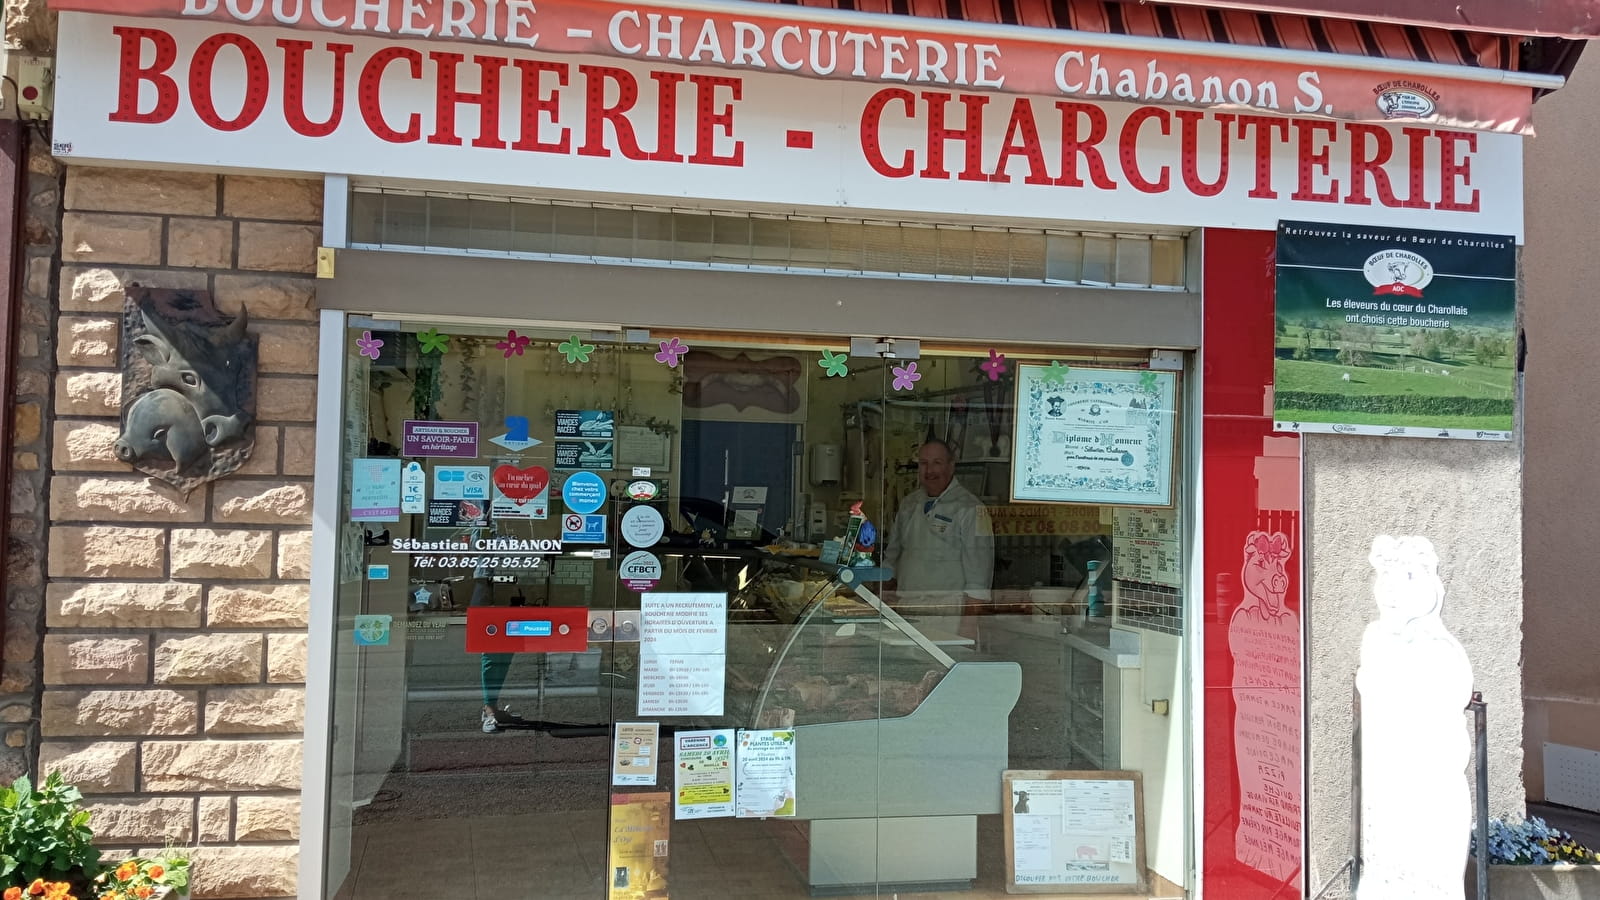 Boucherie-Charcuterie Chabanon